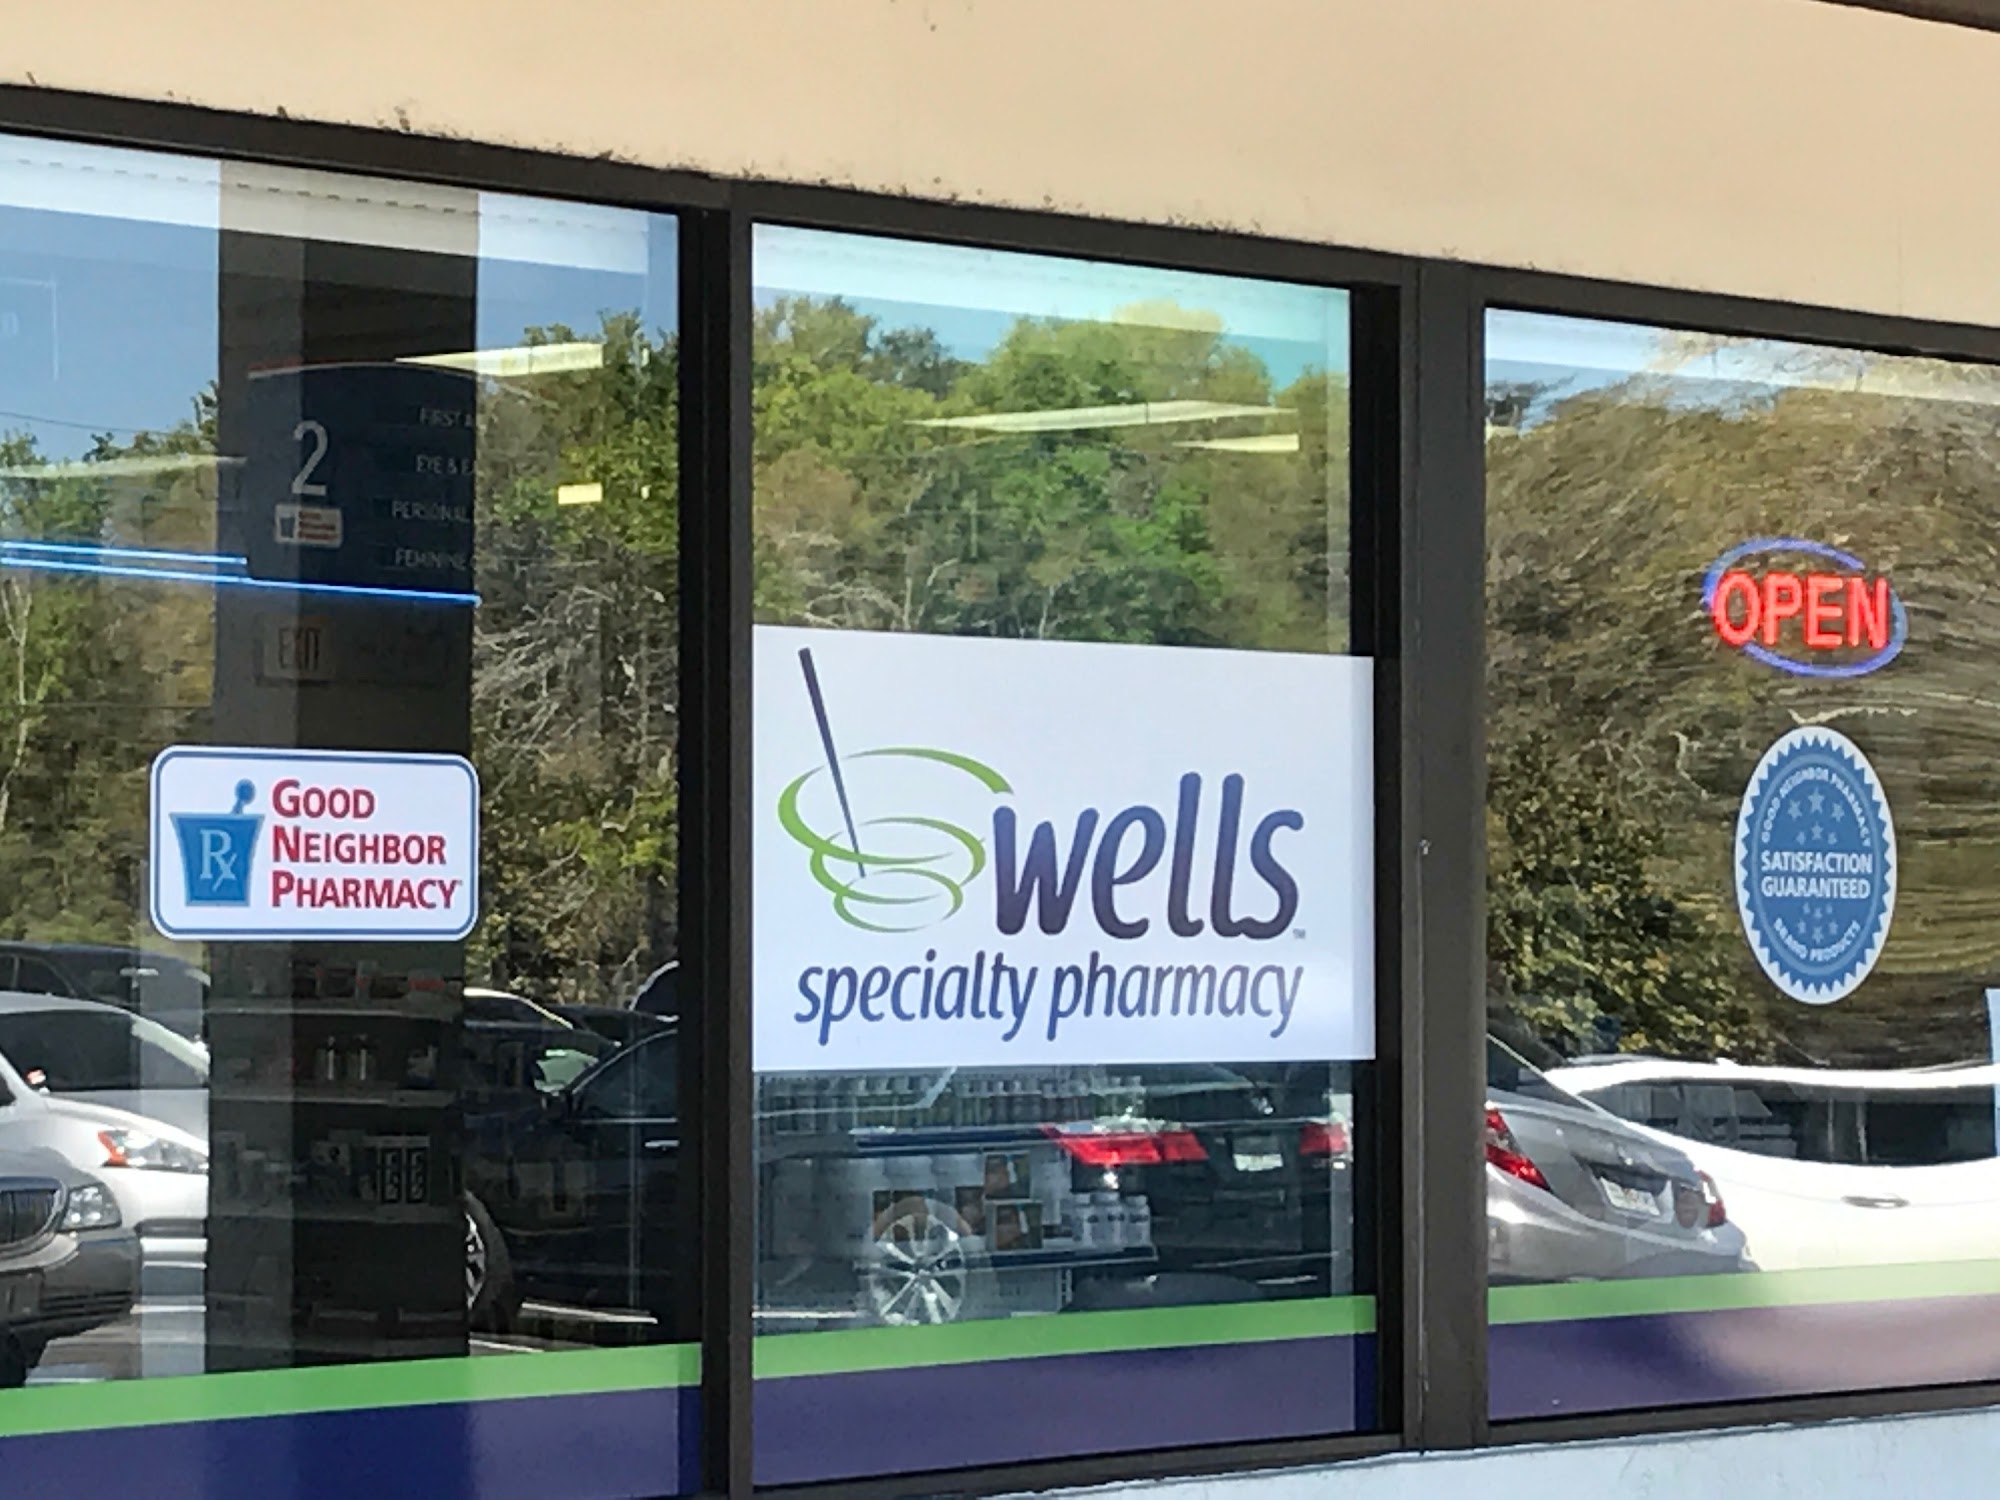 Wells Specialty Pharmacy